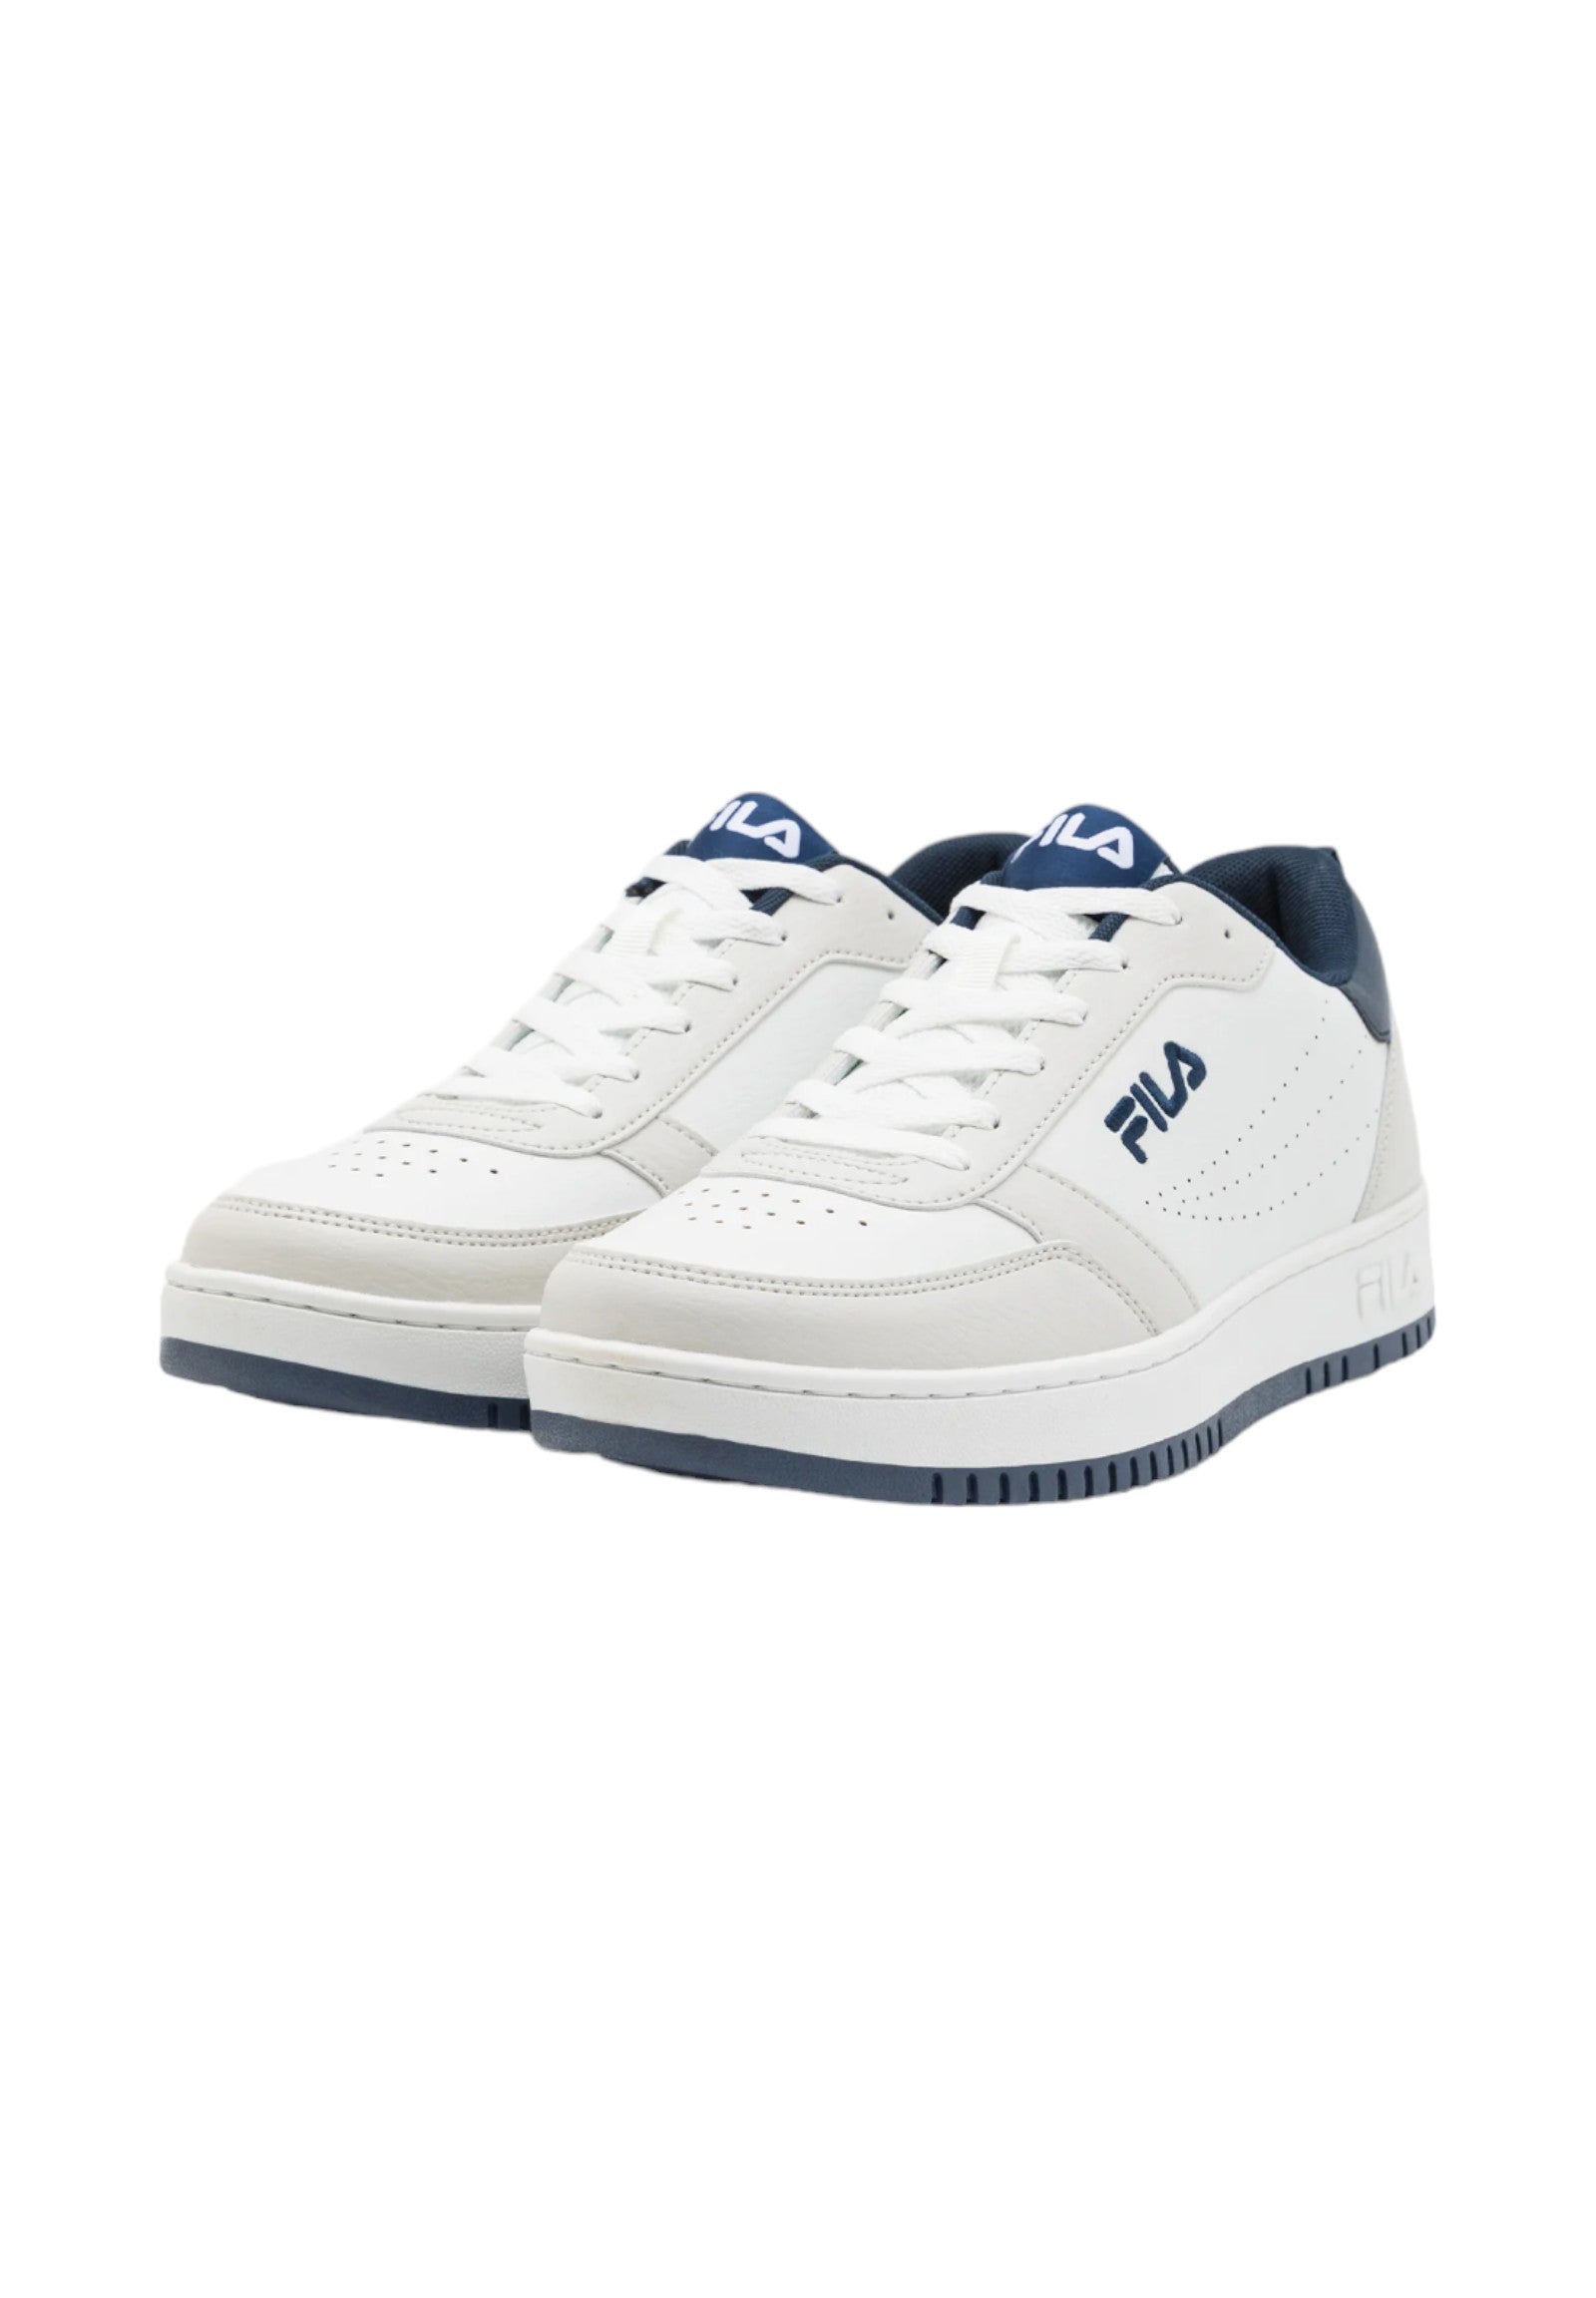 Sneakers Ffm0308 White, Fila Navy